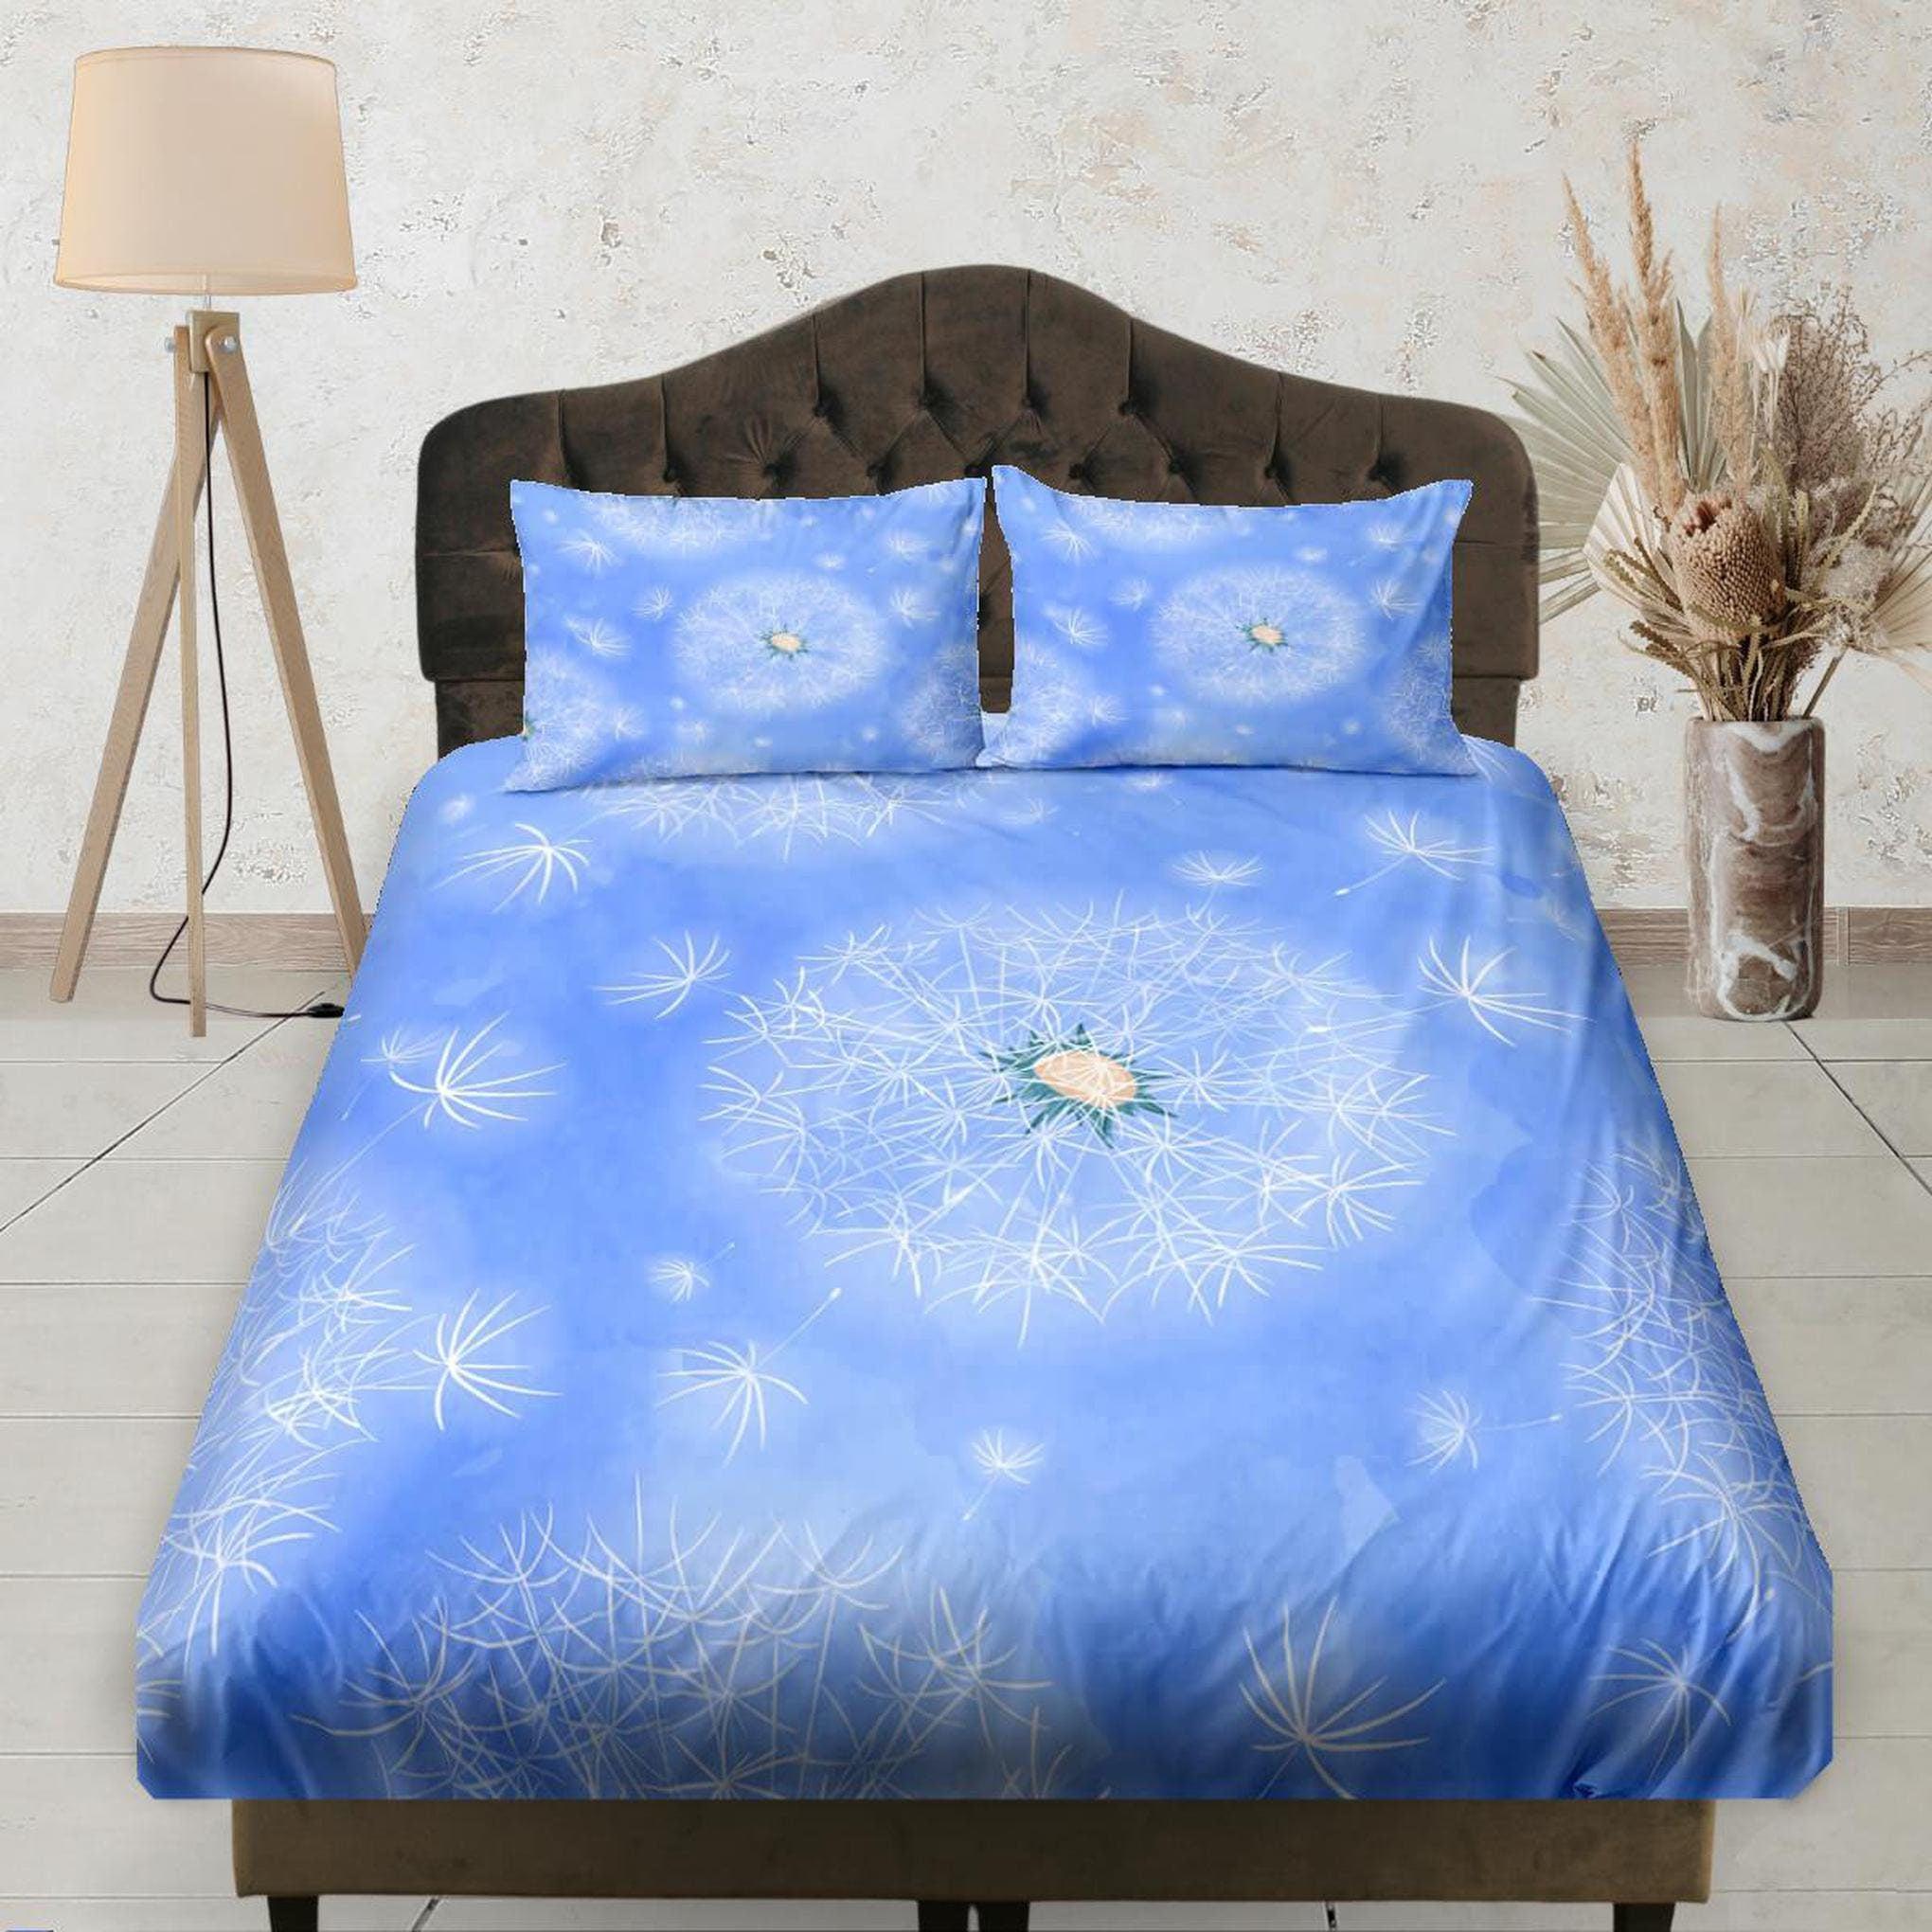 daintyduvet Dandellion Sky Blue Fitted Bedsheet Deep Pocket, Floral Prints, Aesthetic Boho Bedding Set Full, Dorm Bedding, Crib Sheet, King, Queen Sheet